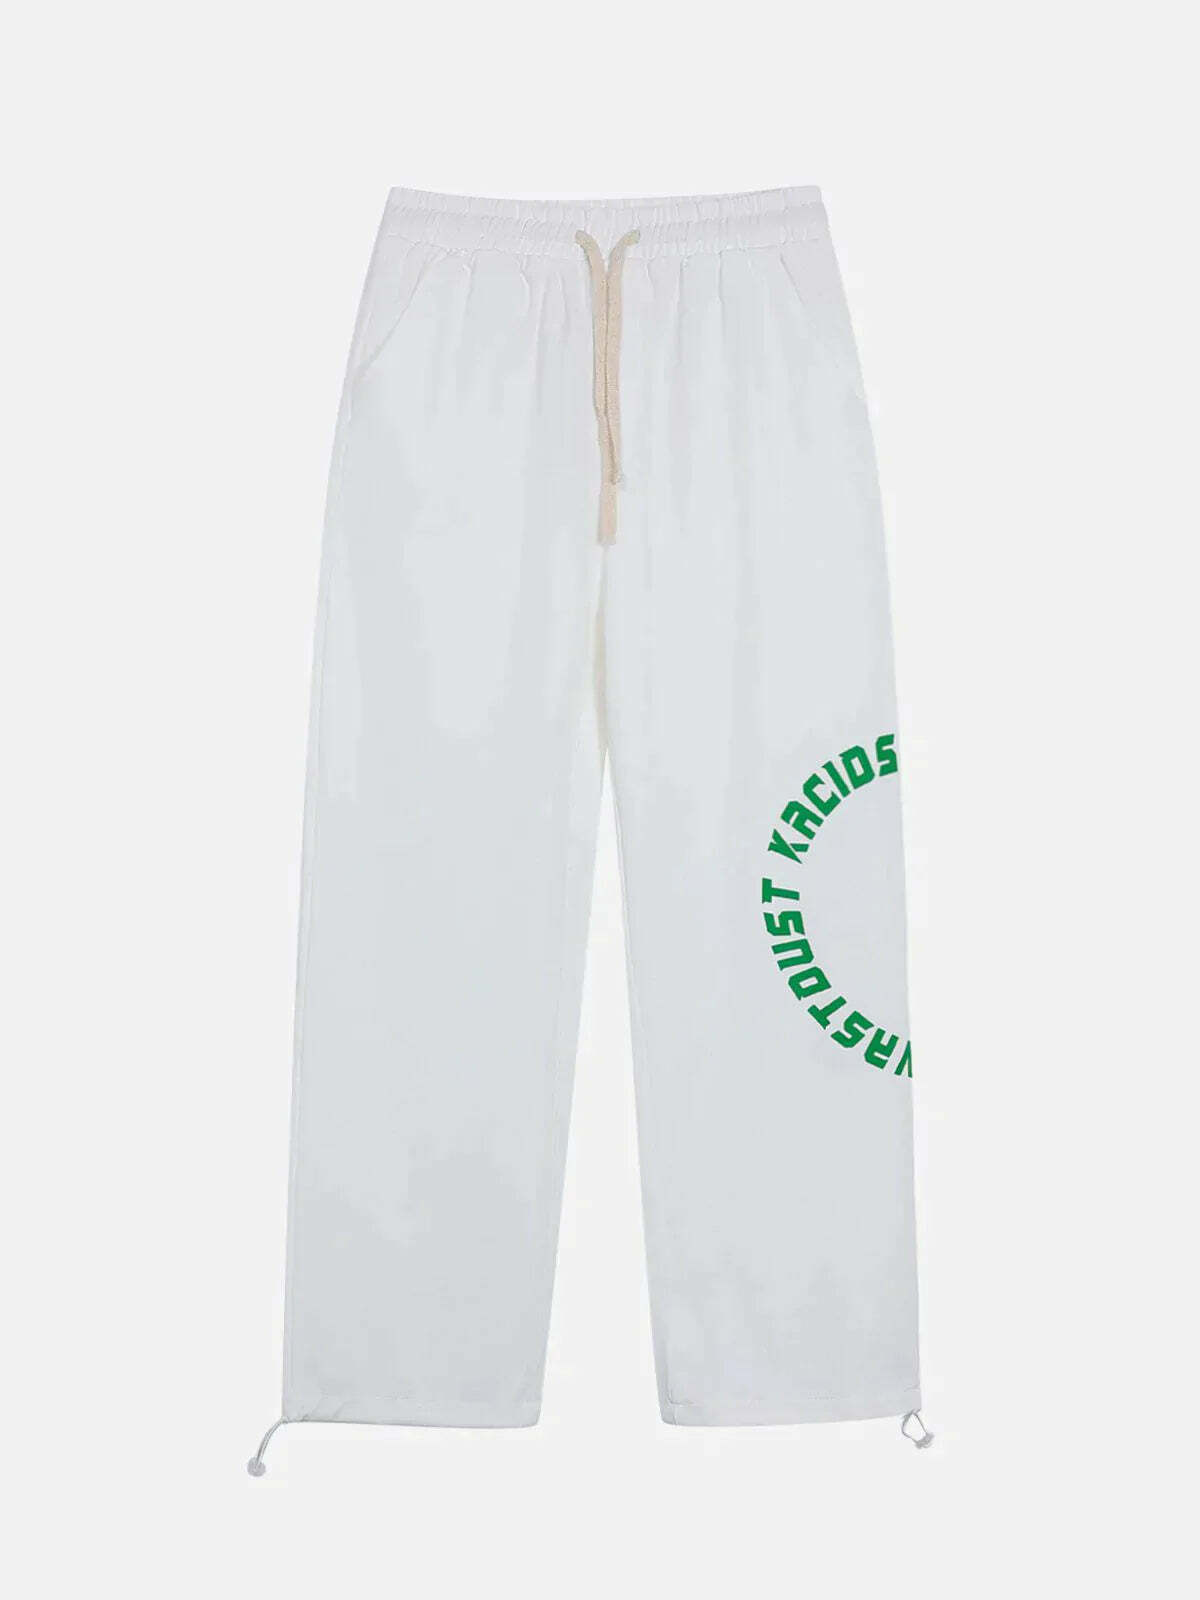 graphics embellished denim pants edgy streetwear essential 6611